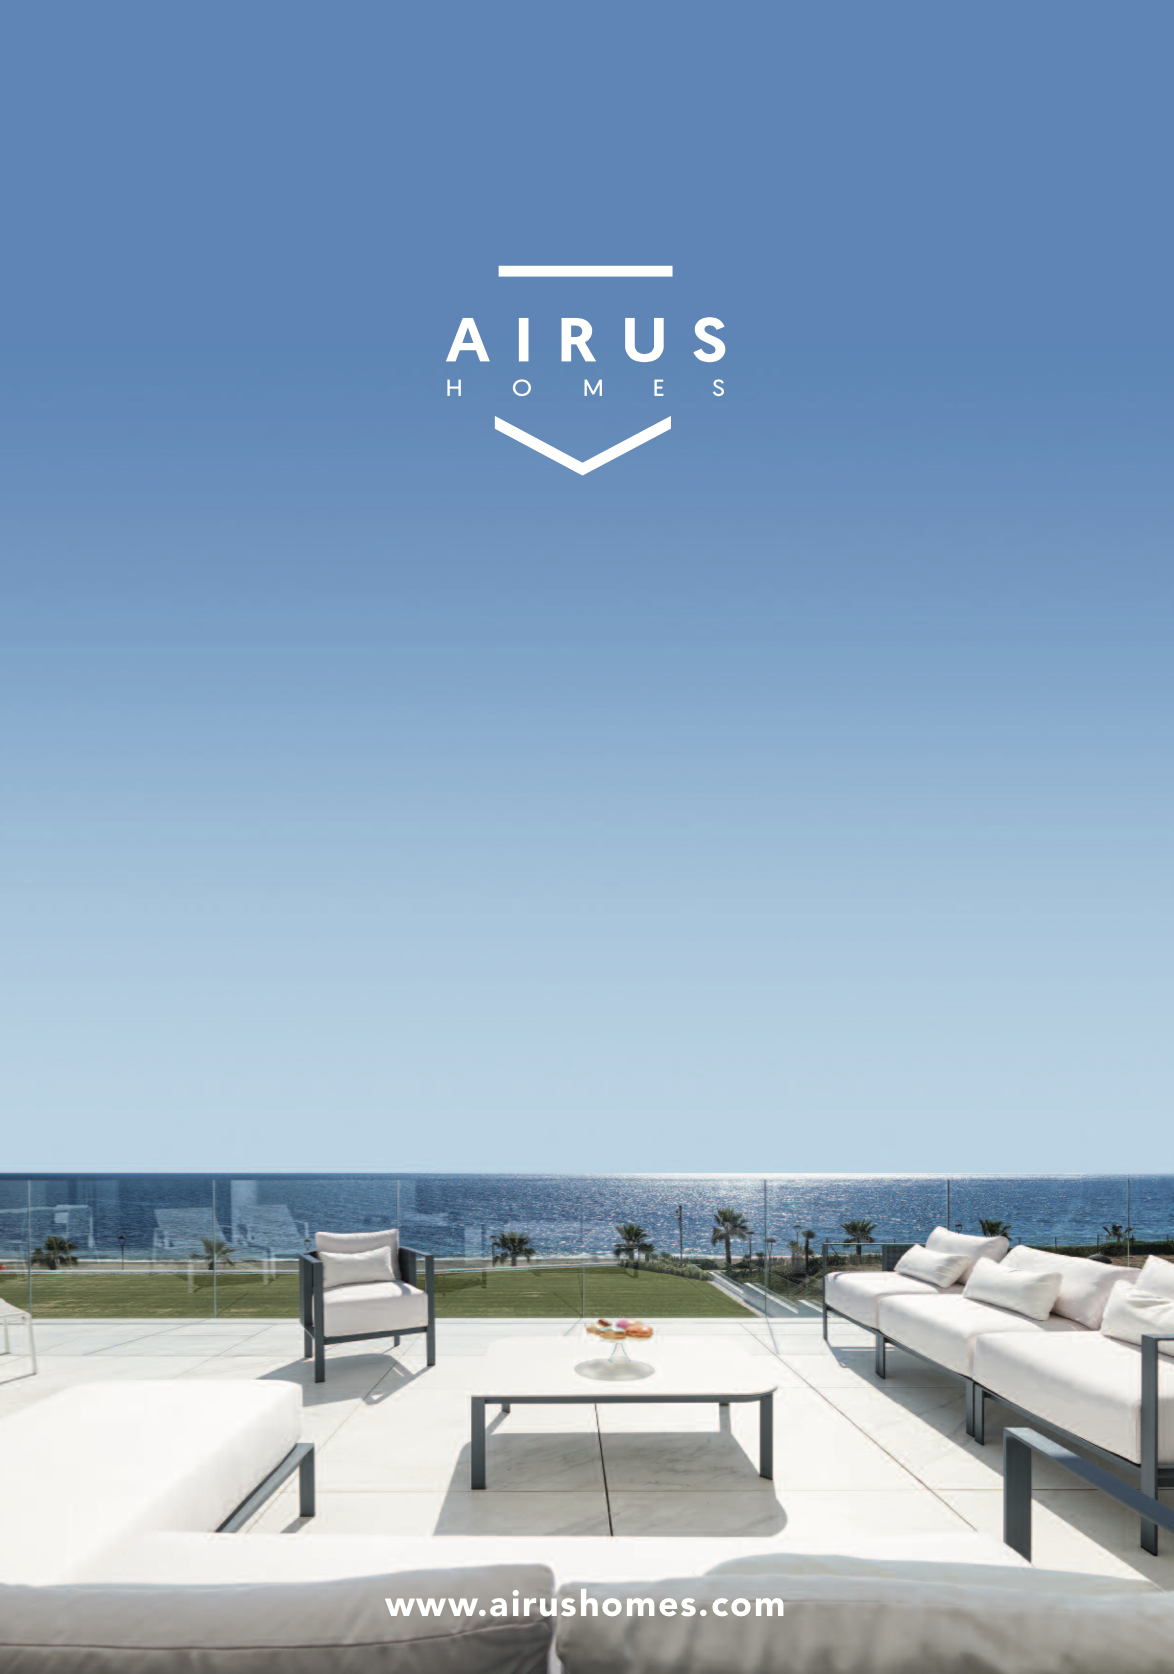 Airus homes, last issue